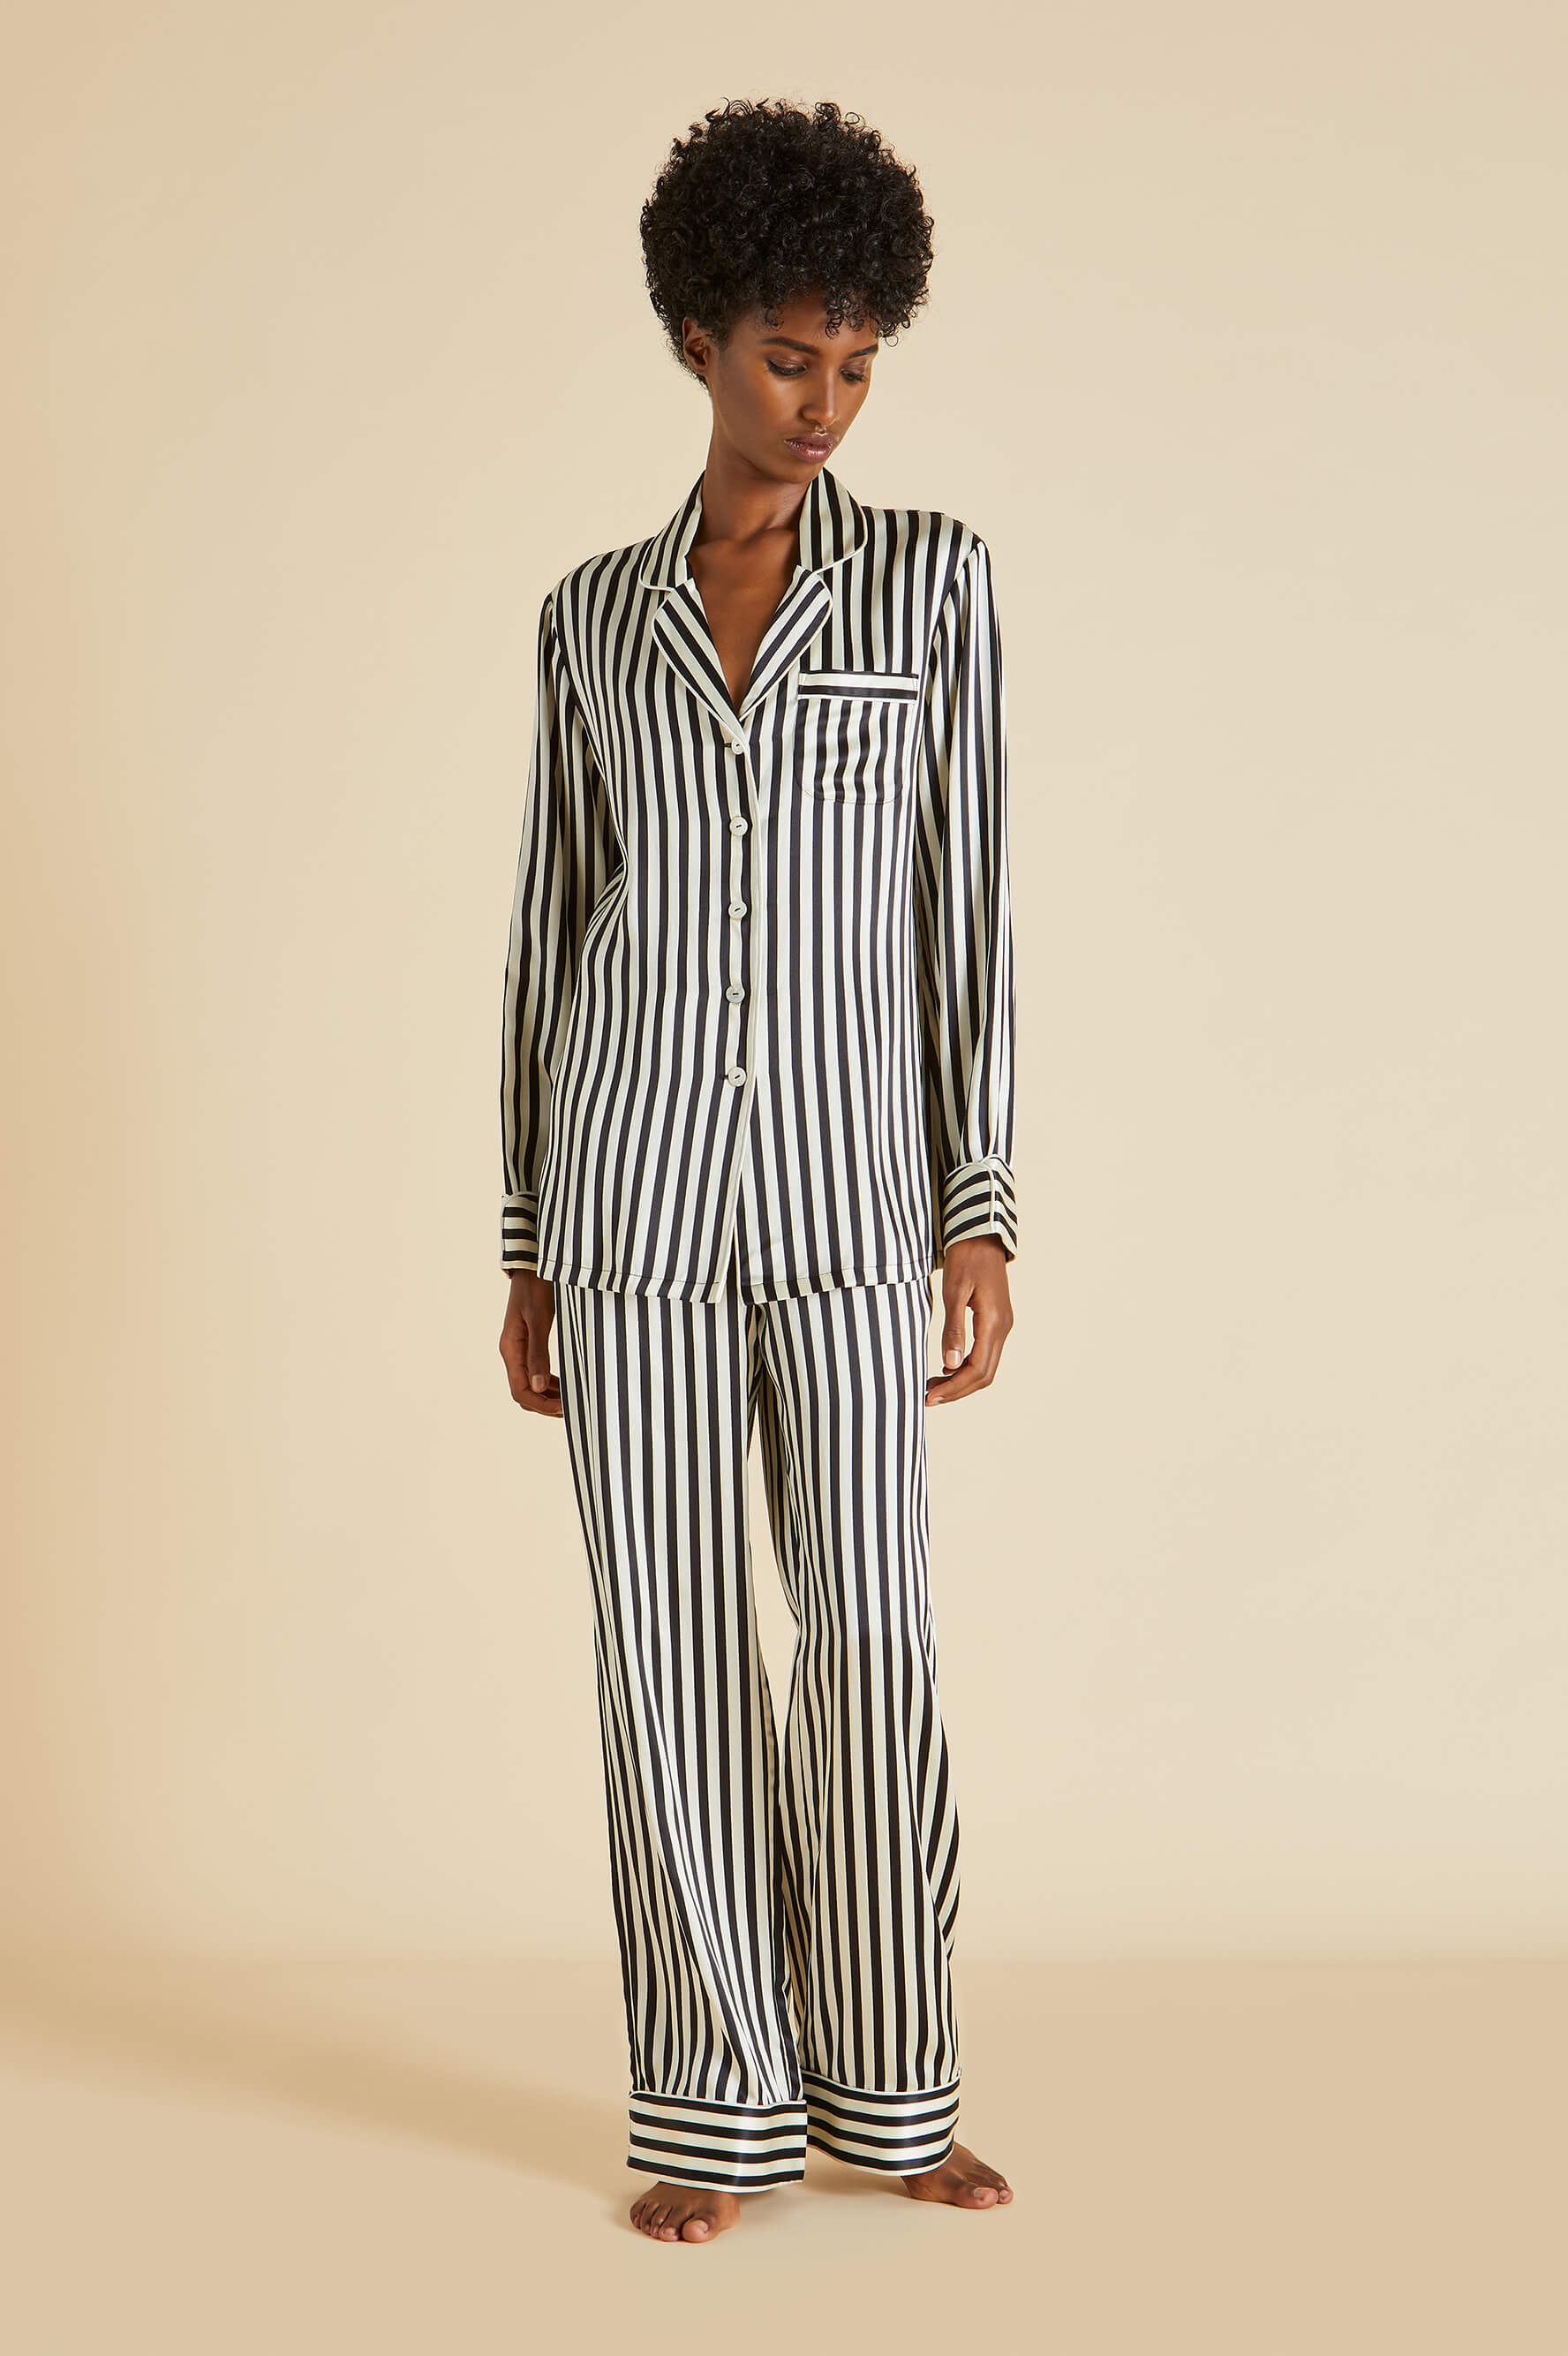 Black And White Striped Silk Pajama Set For Women